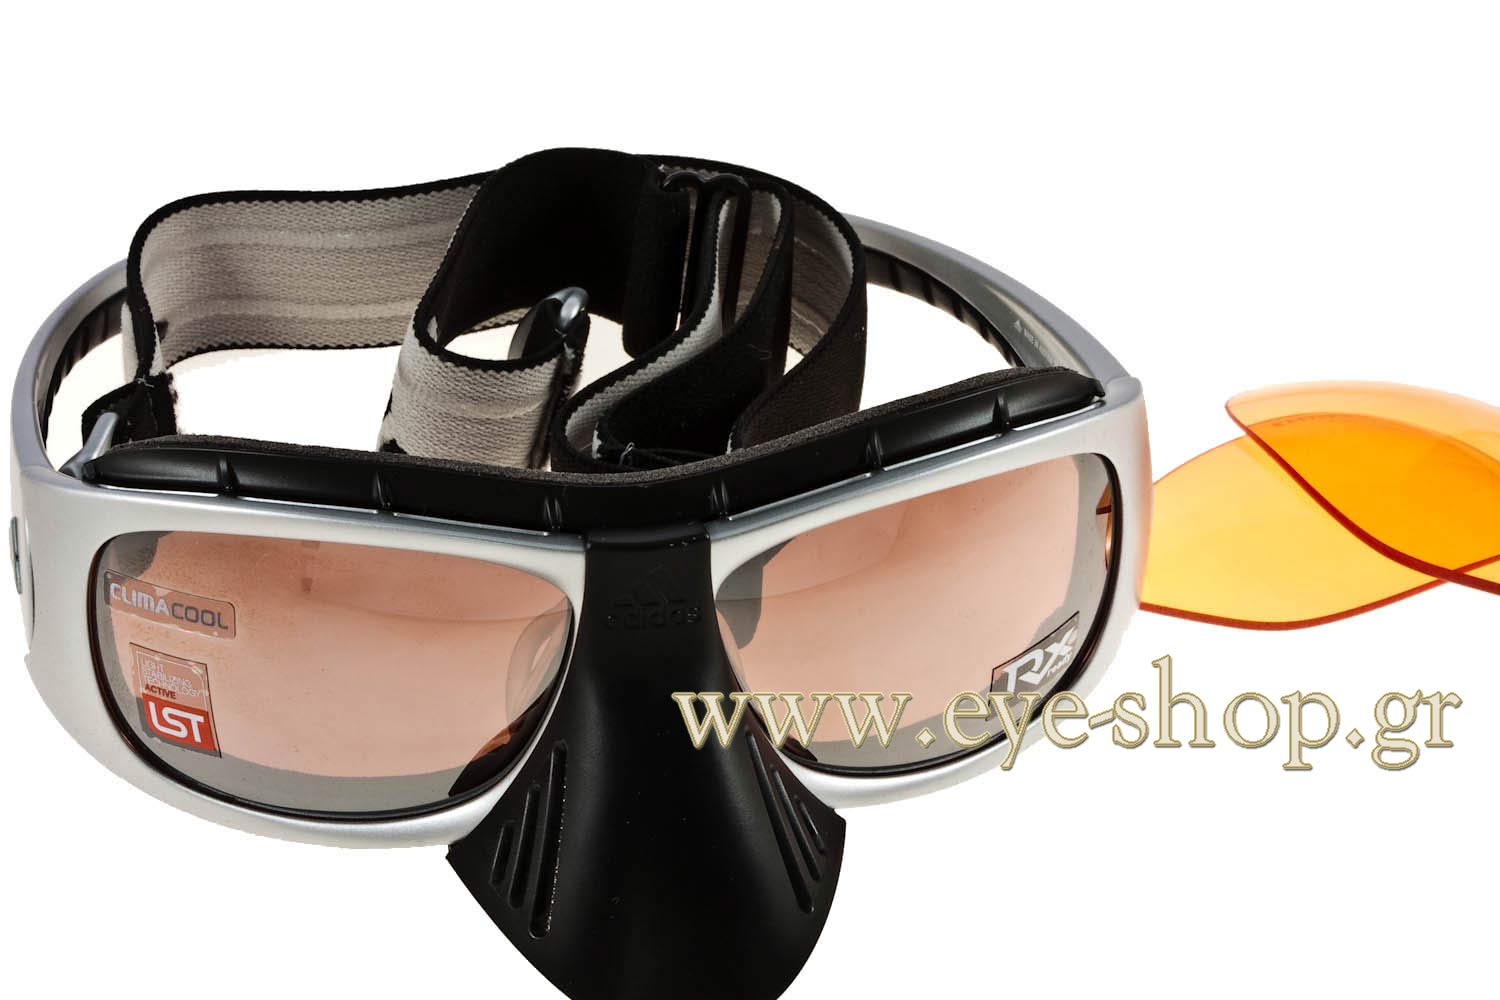 thomas-huber-wearing-sunglasses-adidas-terrex-pro-a143 wearing Adidas at